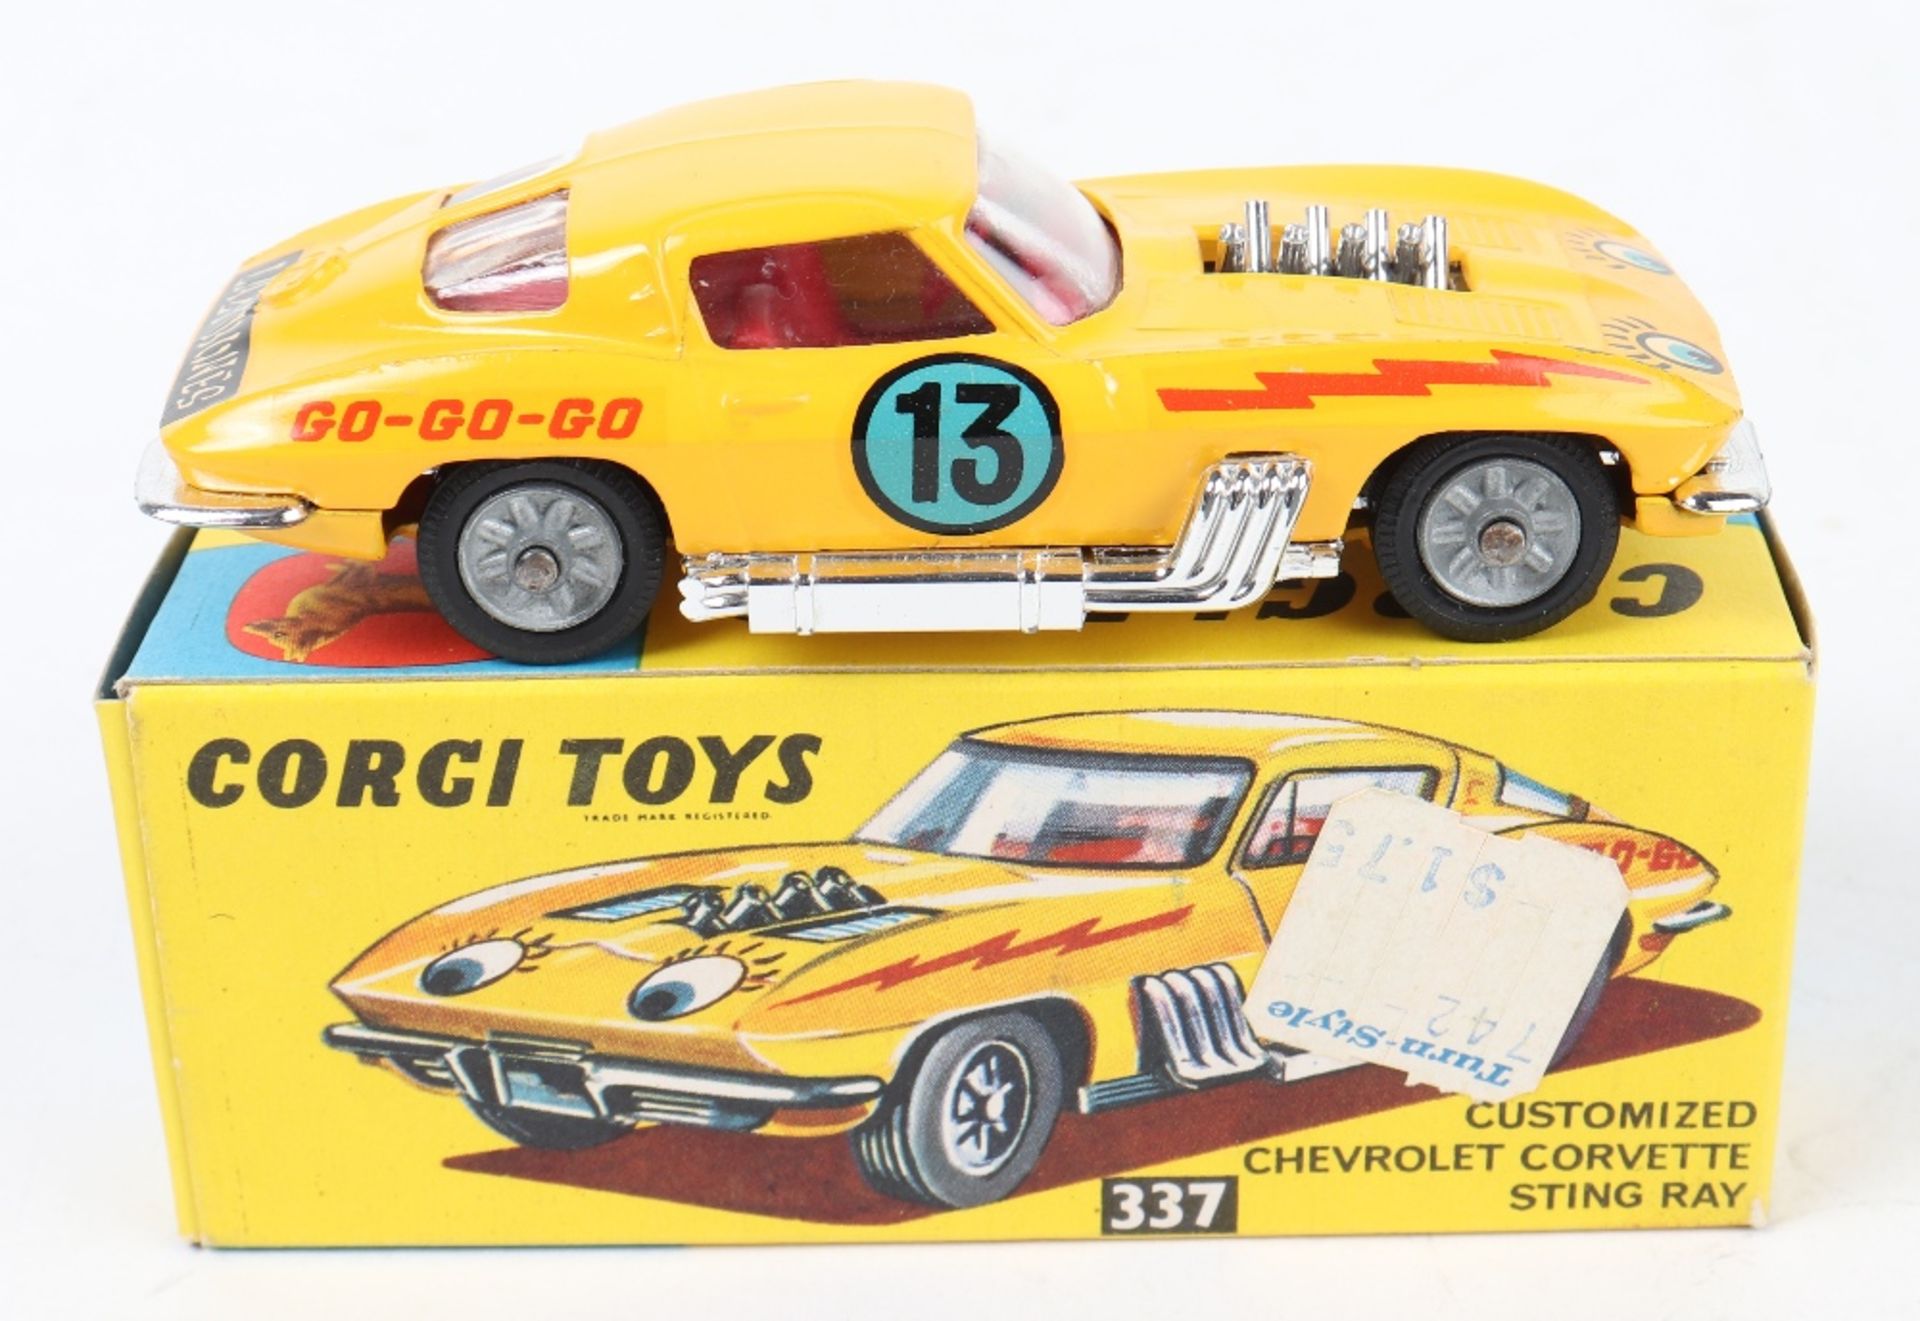 Corgi Toys 337 Customised Chevrolet Corvette Stingray - Image 2 of 5